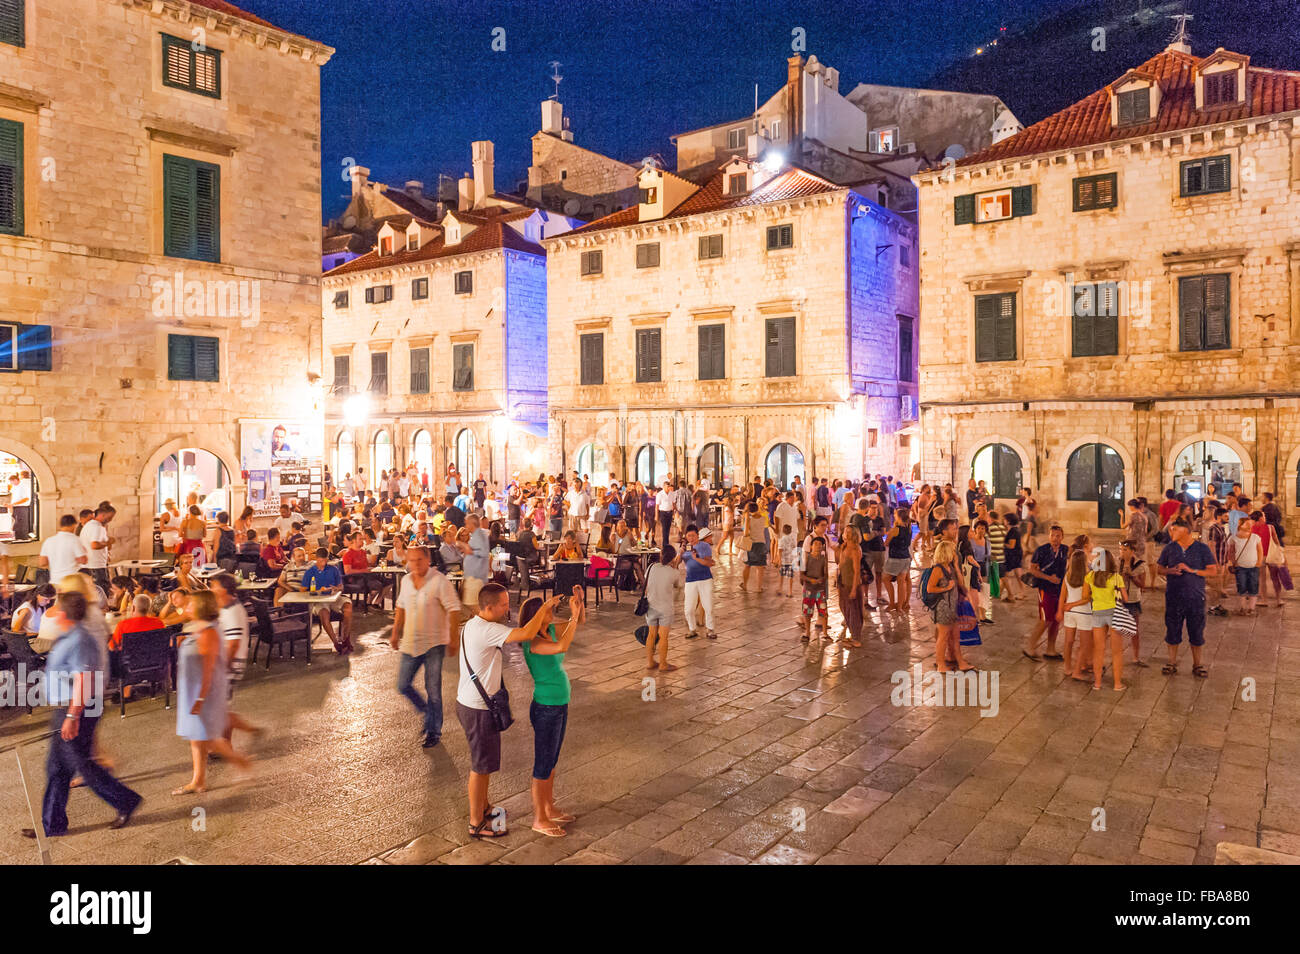 Tourists walk along Stradun, Placa or promenade which is the main street in the Old City of Dubrovnik,Dalmatia,Croatia, Europe. Stock Photo